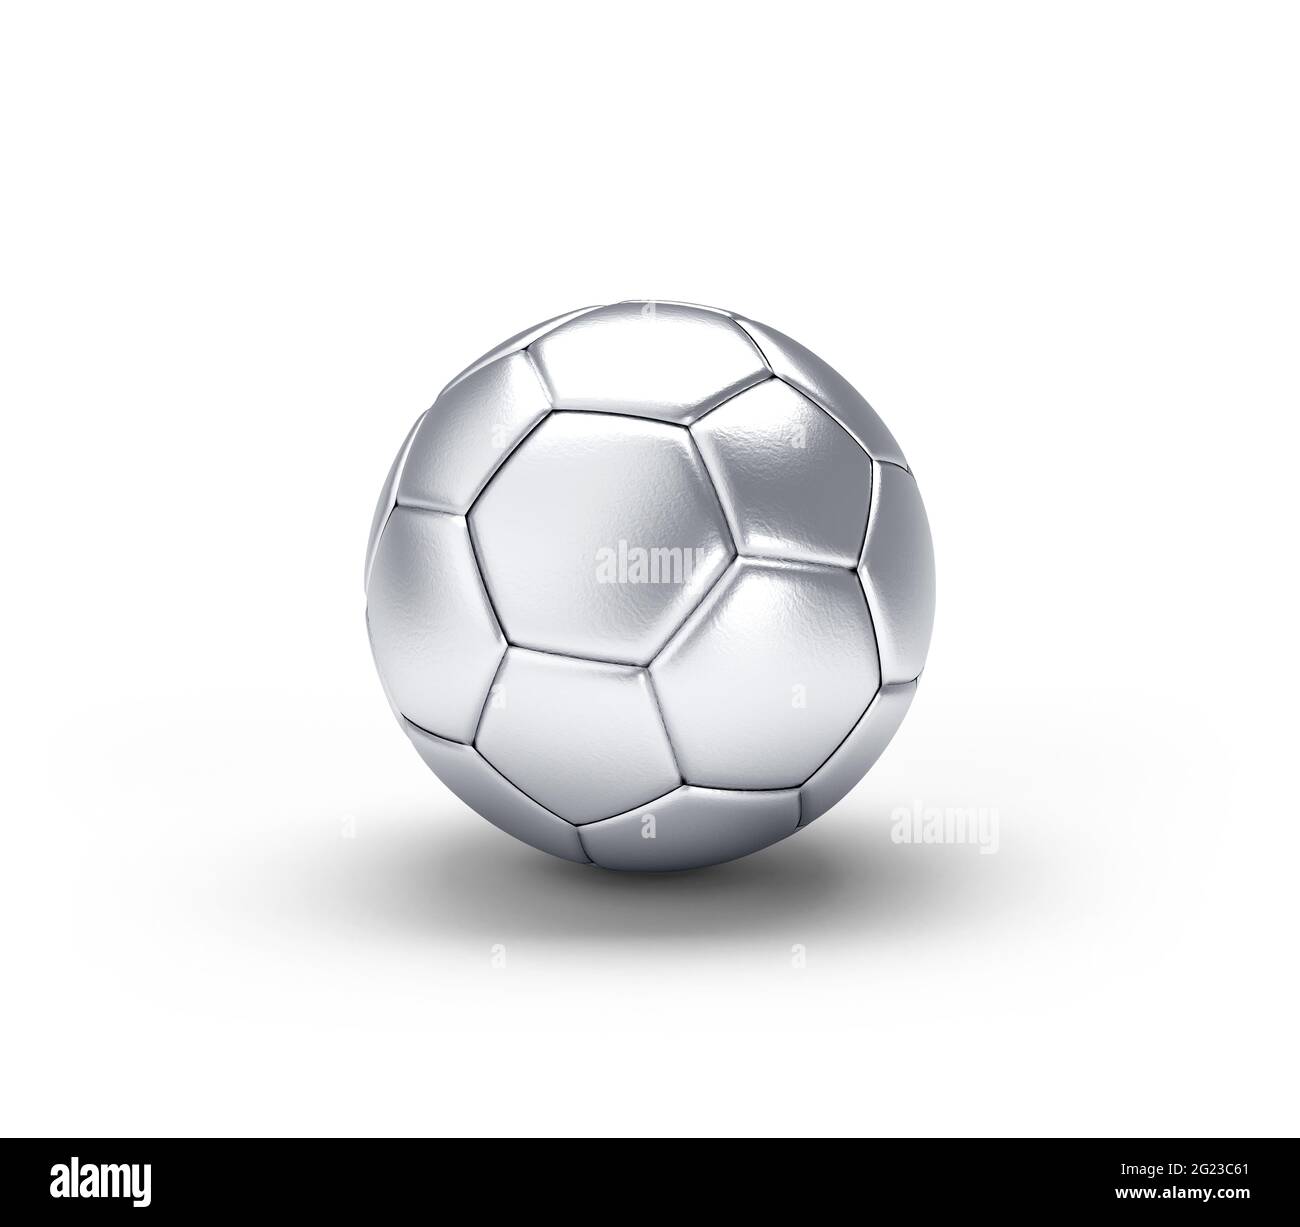 Pelota de fútbol de plata aislada sobre fondo blanco. Ilustración 3D. Foto de stock